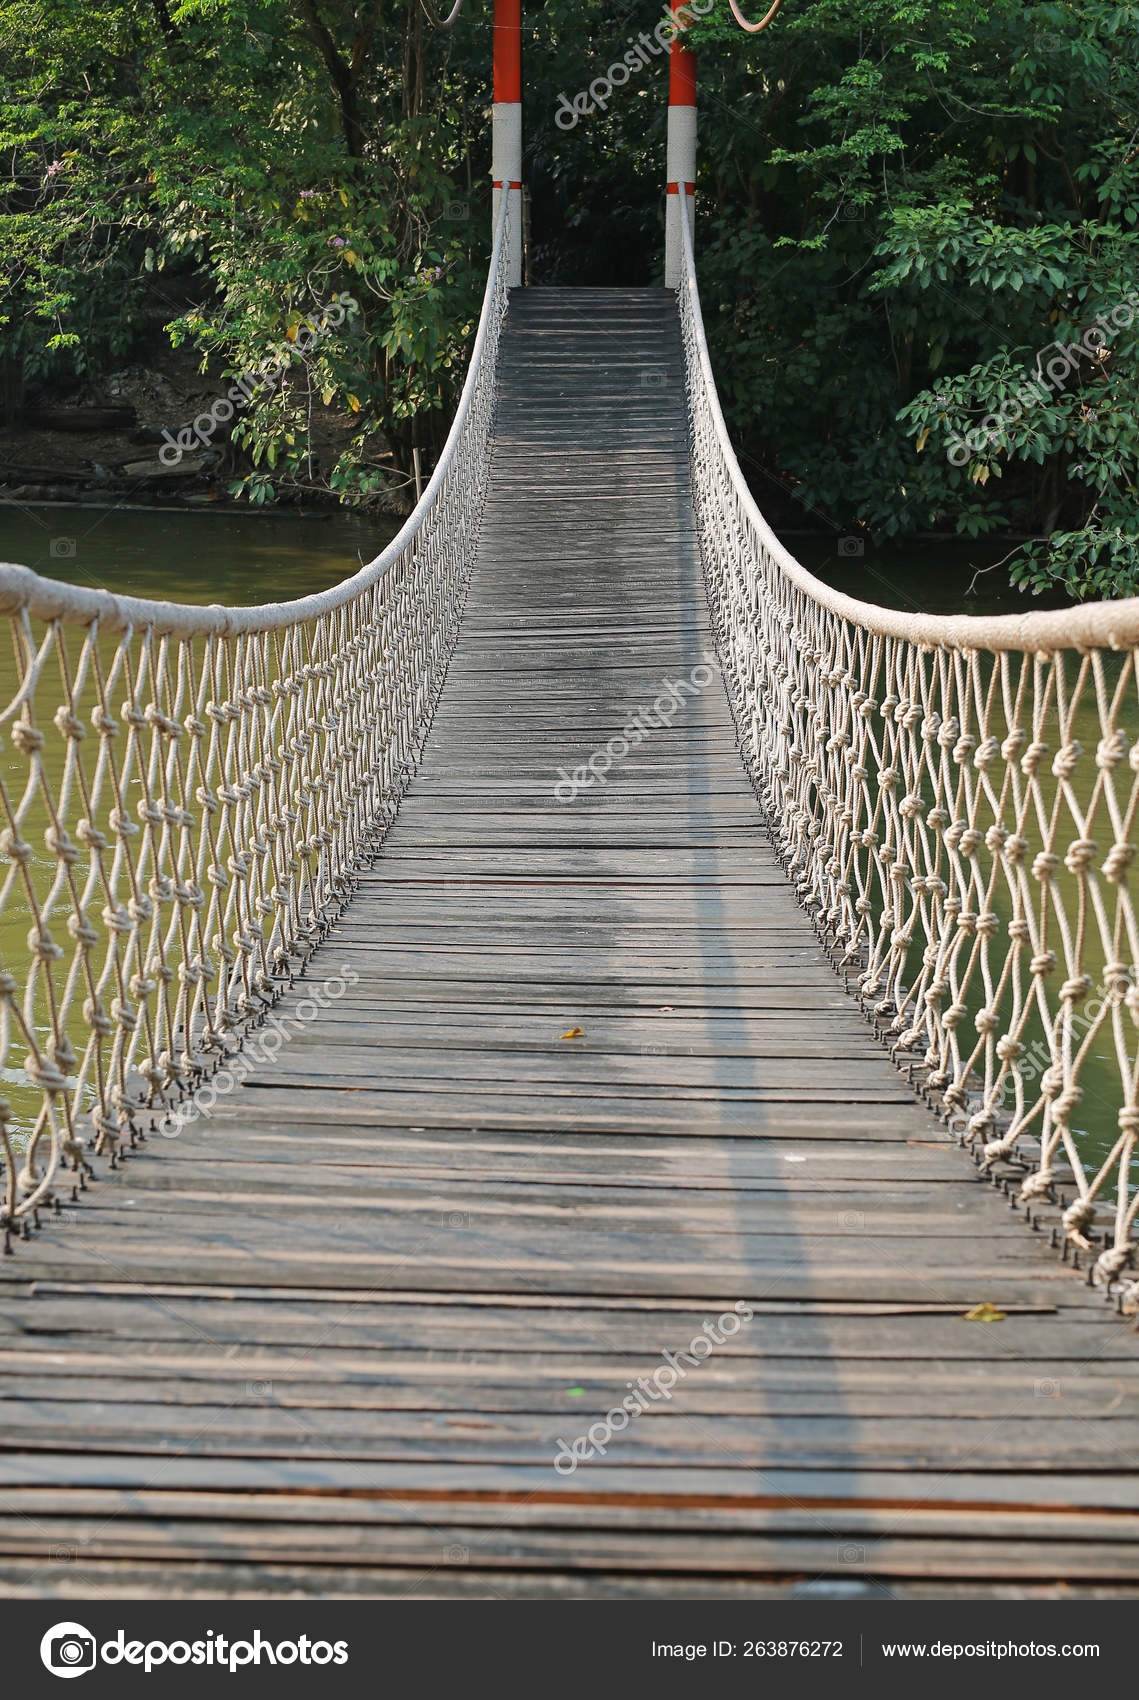 Wooden Rope Suspension Bridge Walk Crossing River — Stock Photo ©  civic_dm@hotmail.com #263876272